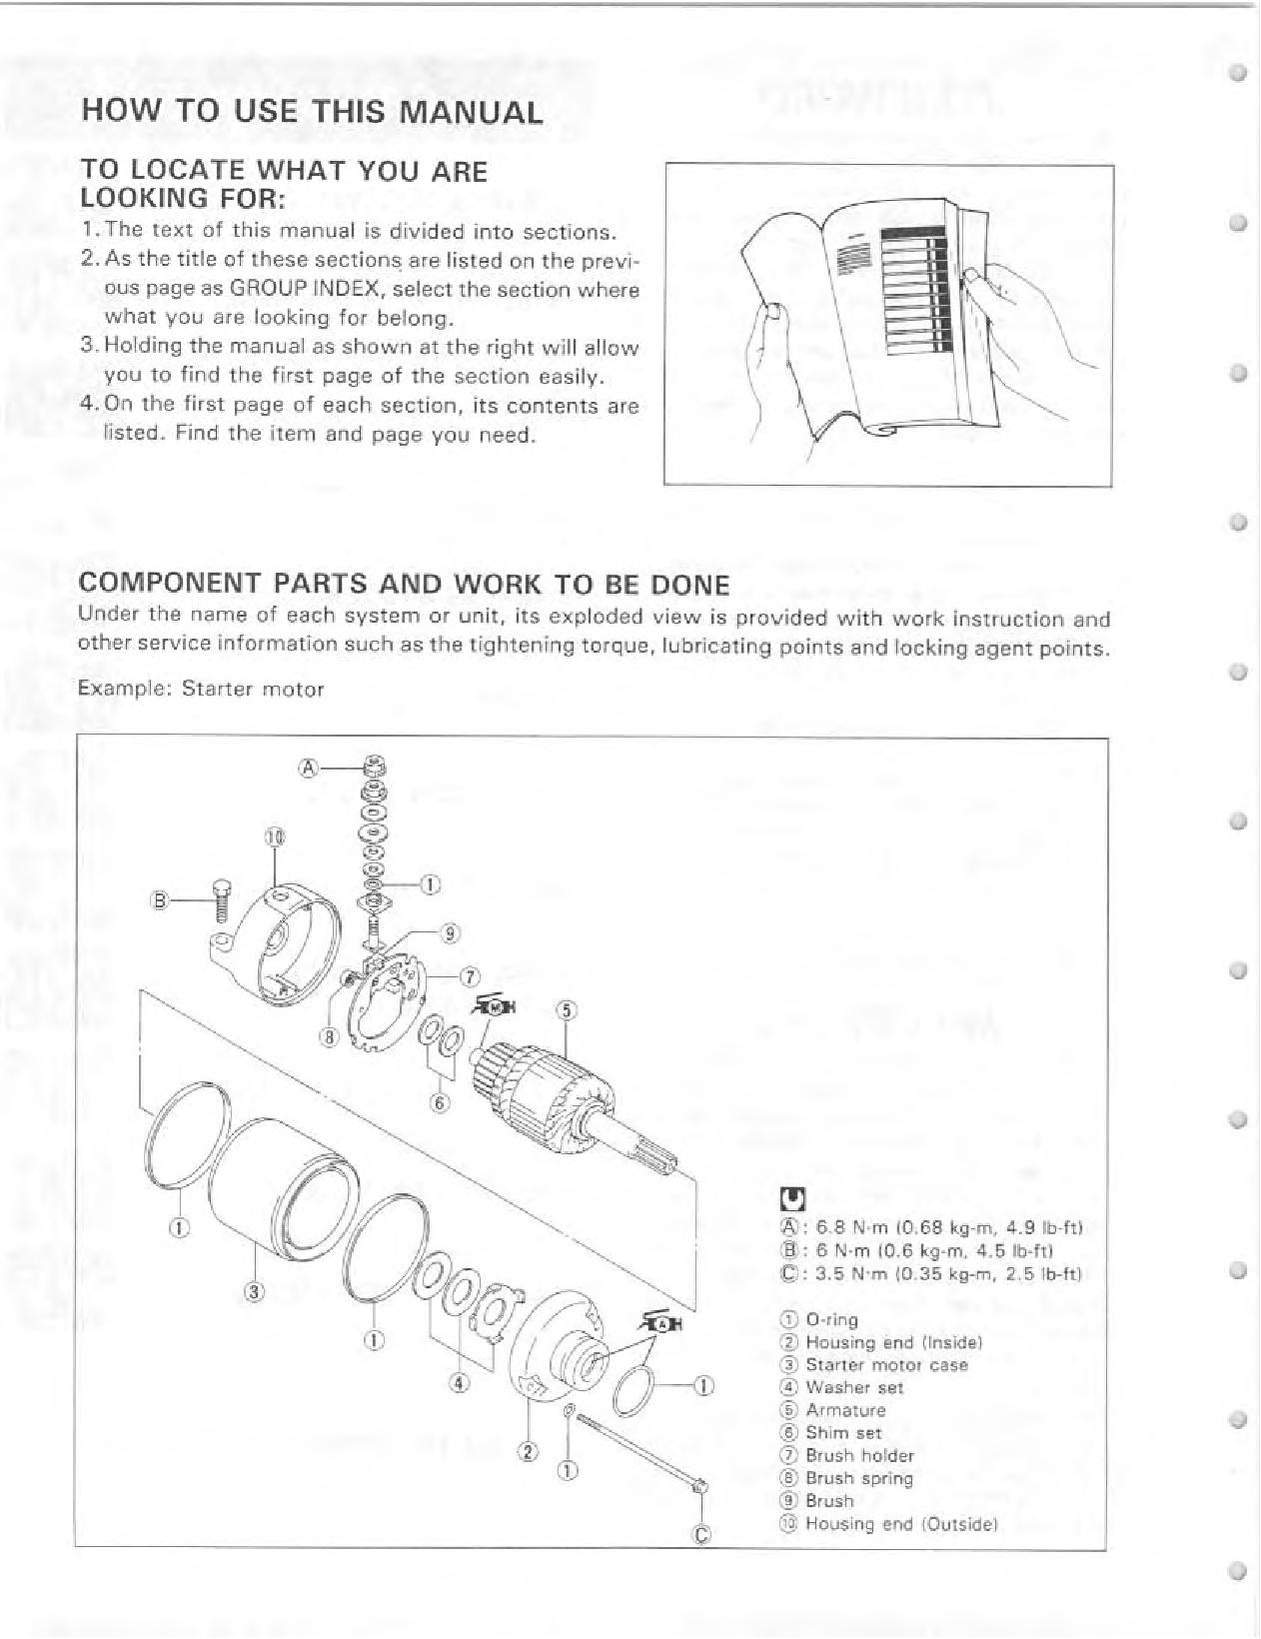 File:Suzuki GSX-R750 1996-1999 Service Manual.pdf